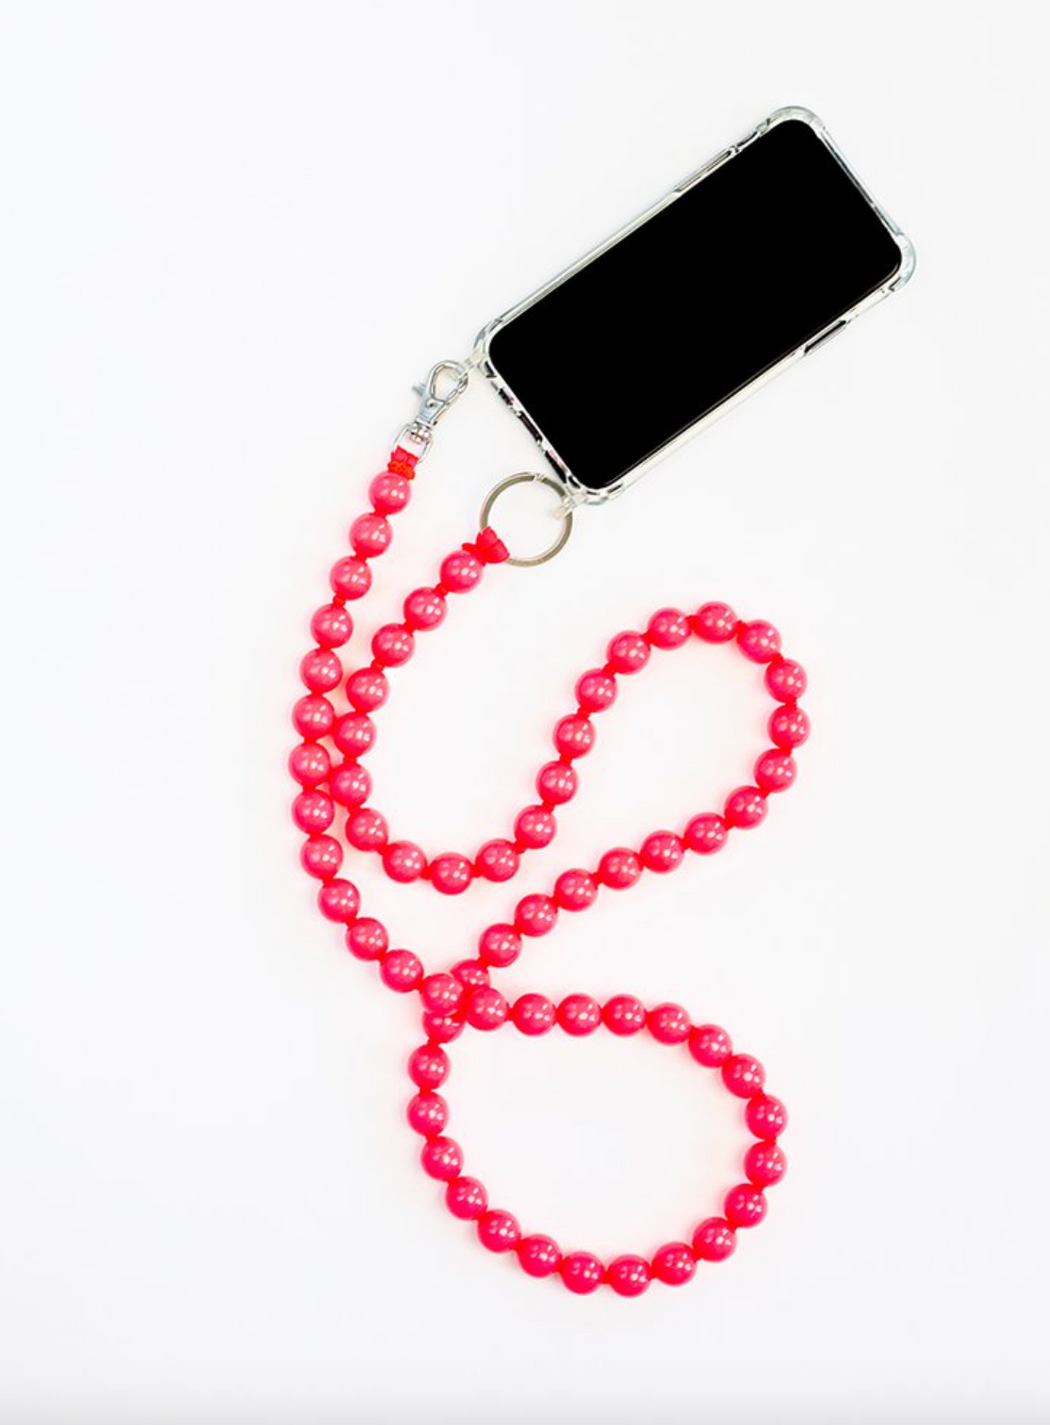 Ina Seifart :: Phone Big Bead Necklace